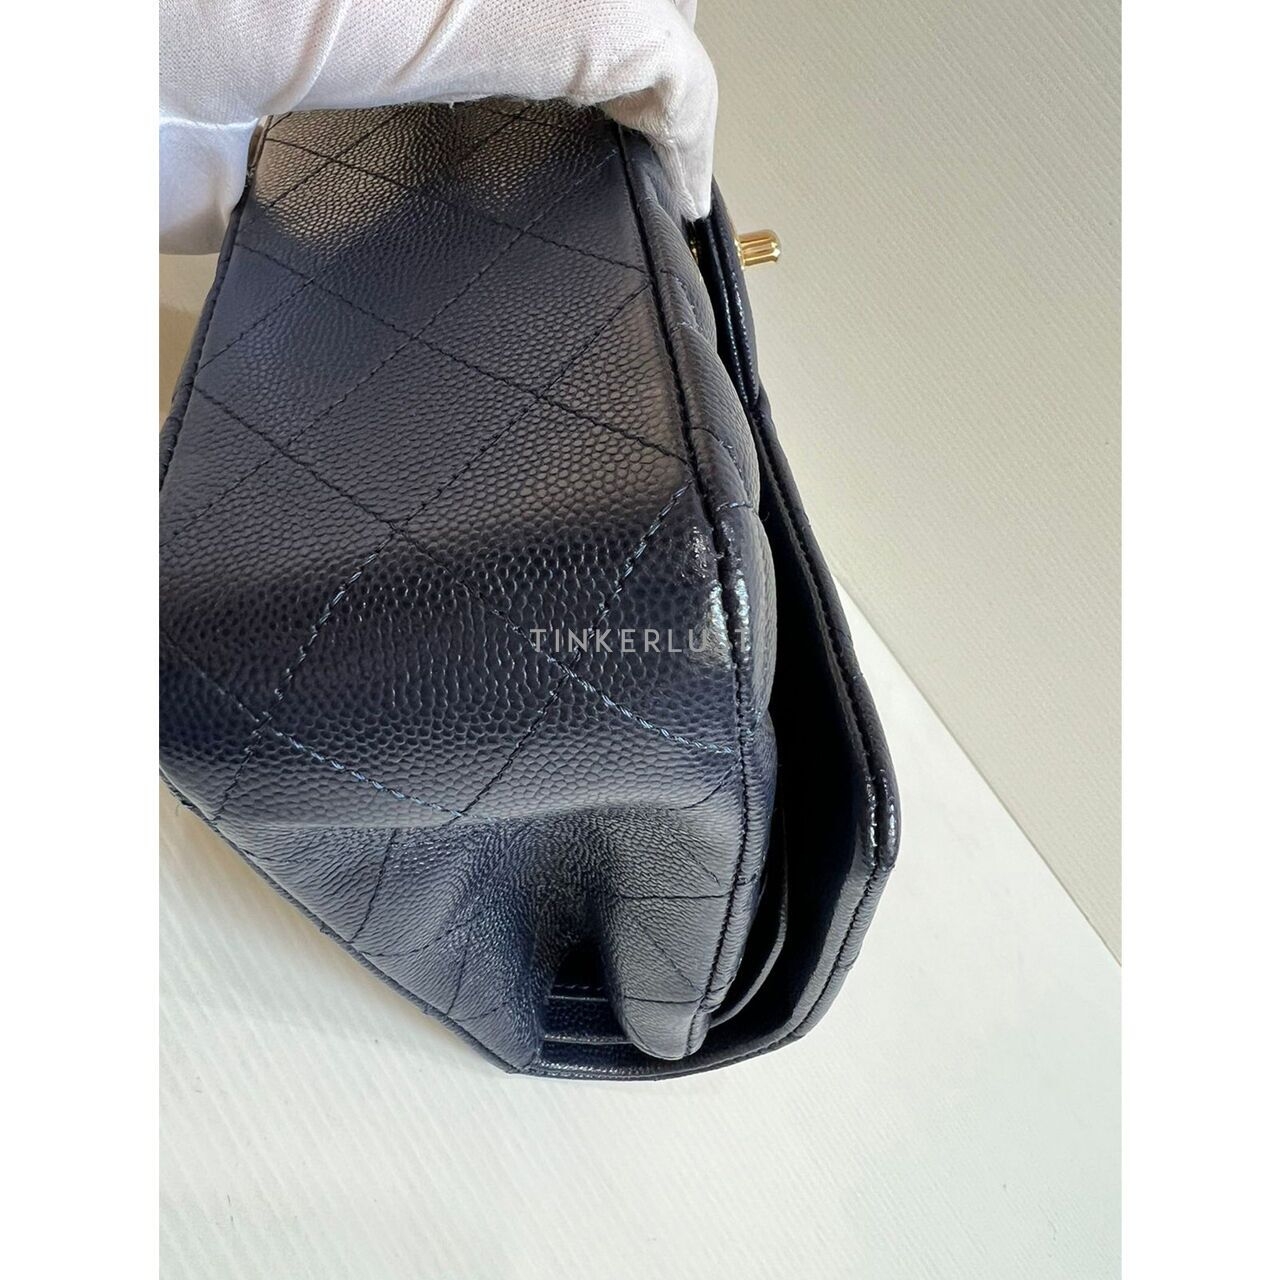 Chanel Classic Medium Navy Blue Caviar #29 LGHW Shoulder Bag